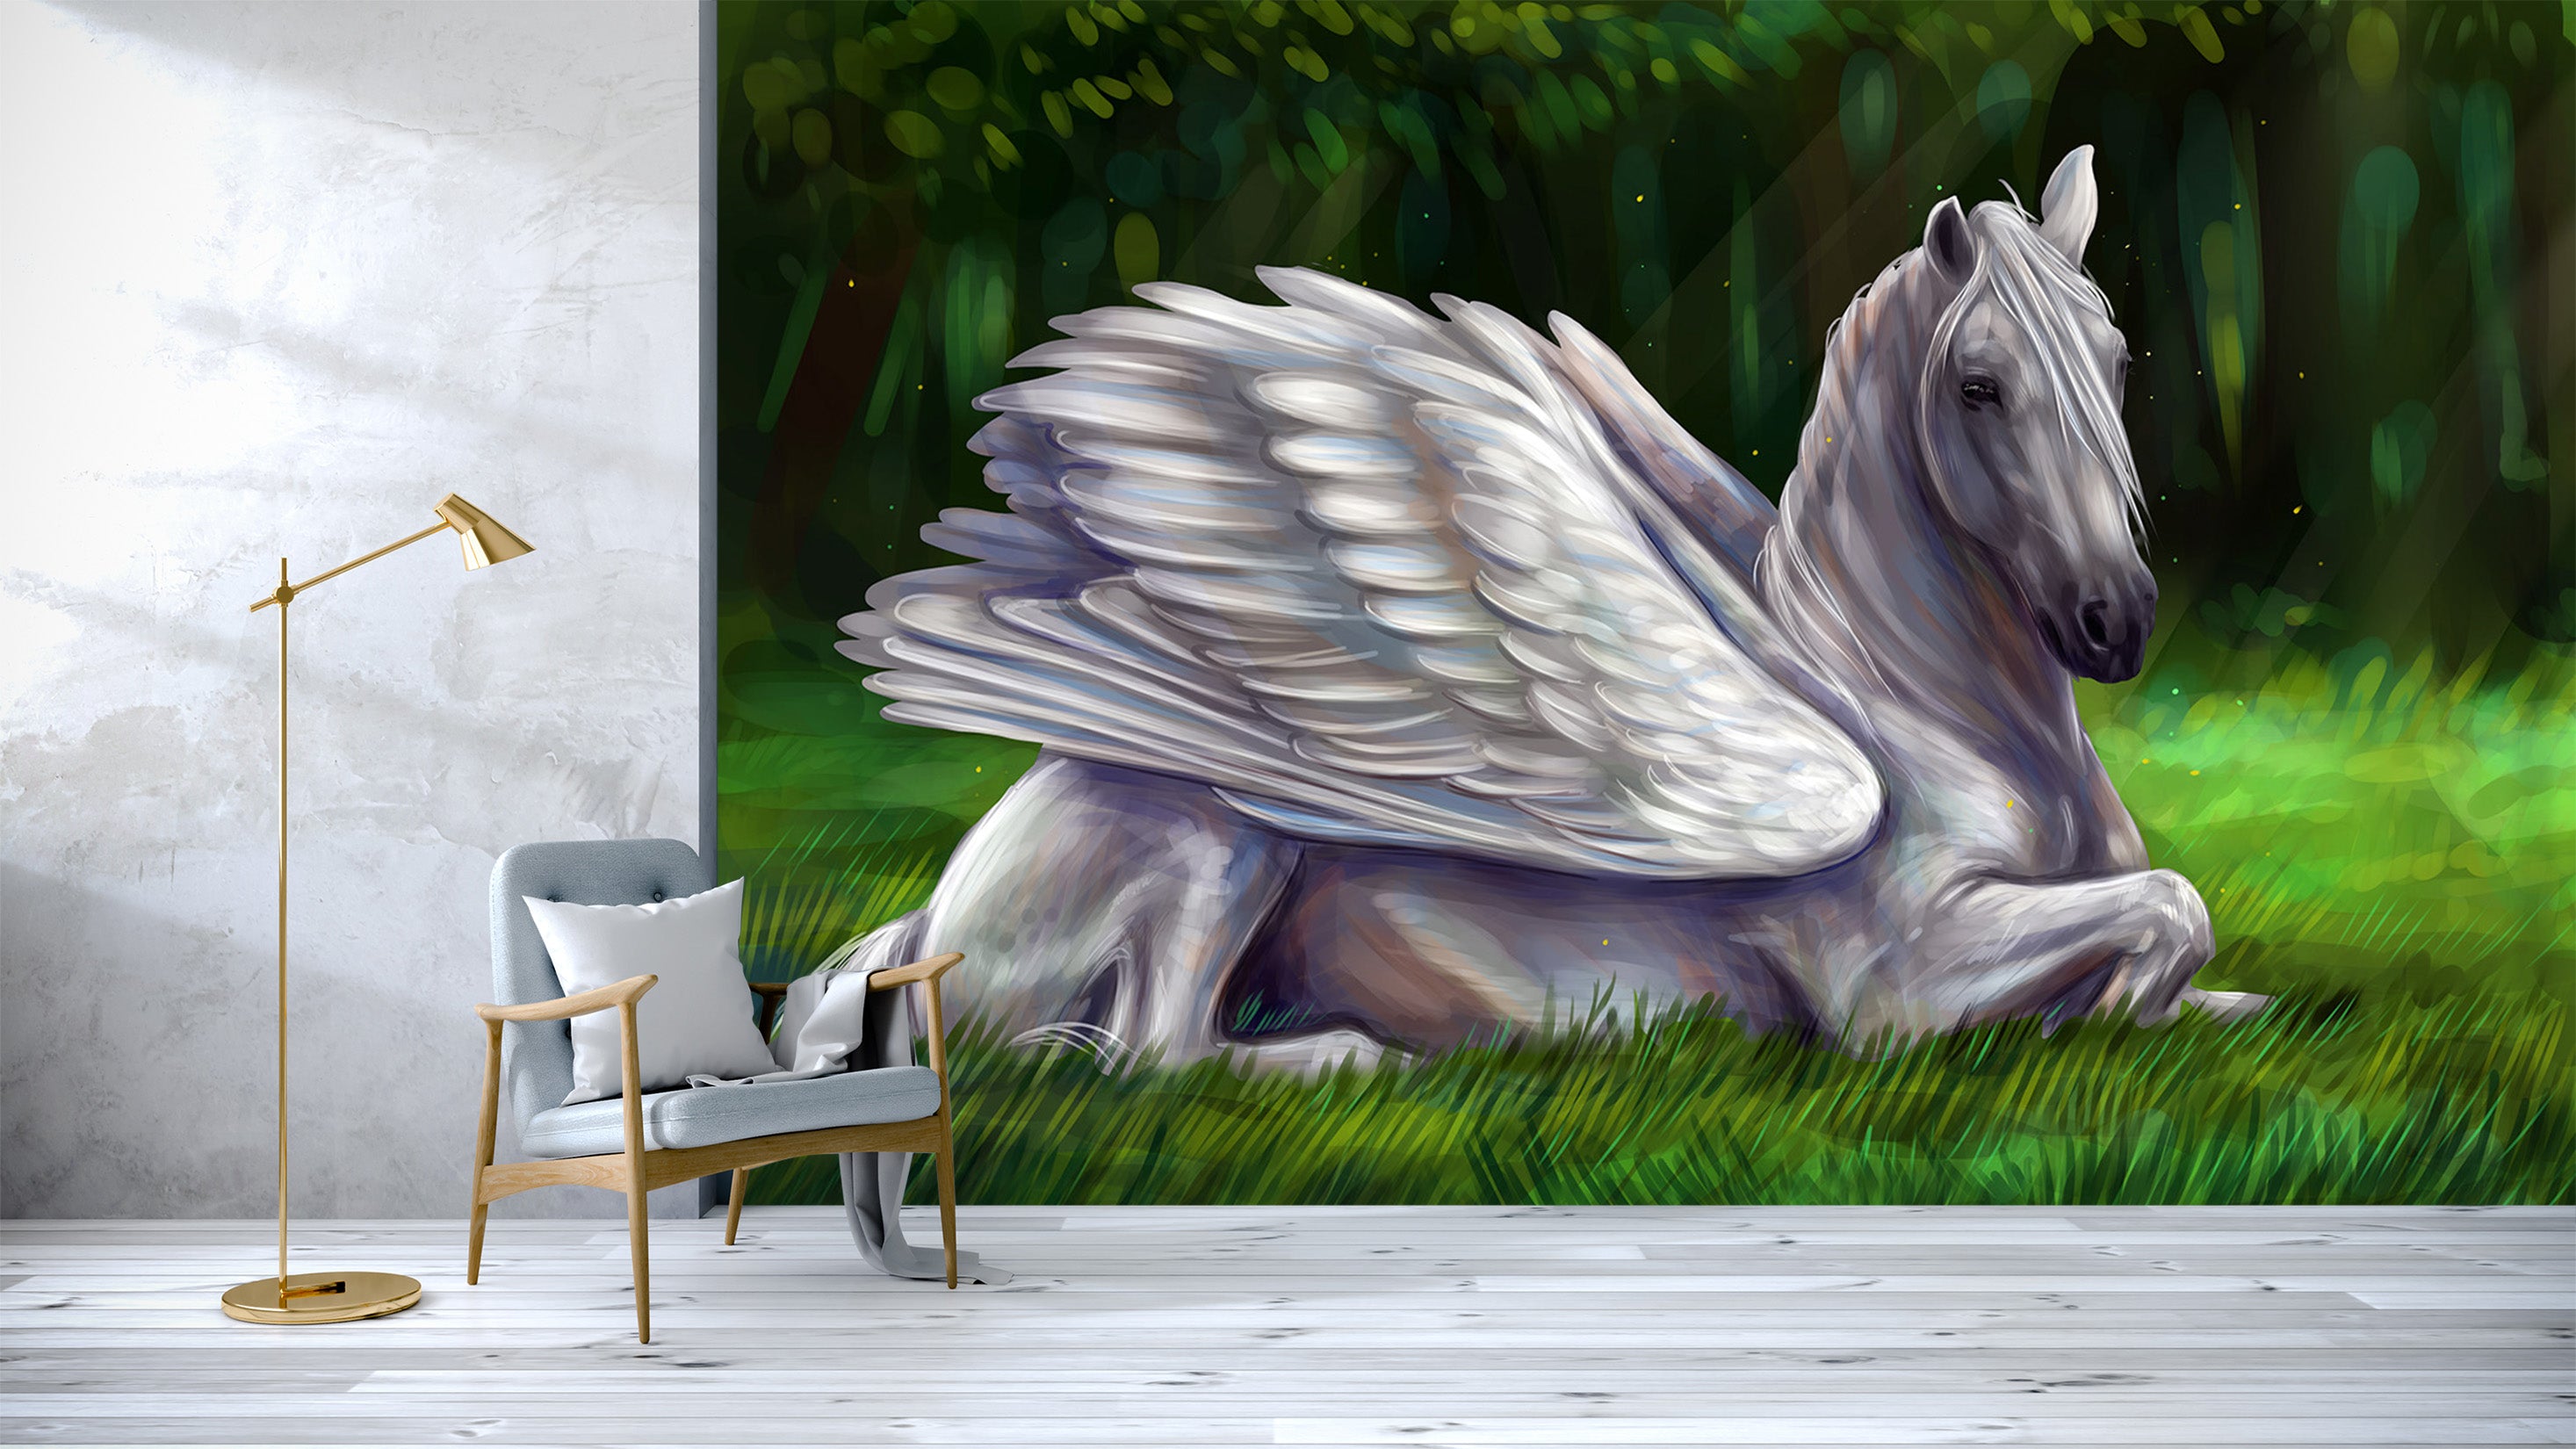 3D Pegasus Lawn 319 Wall Murals